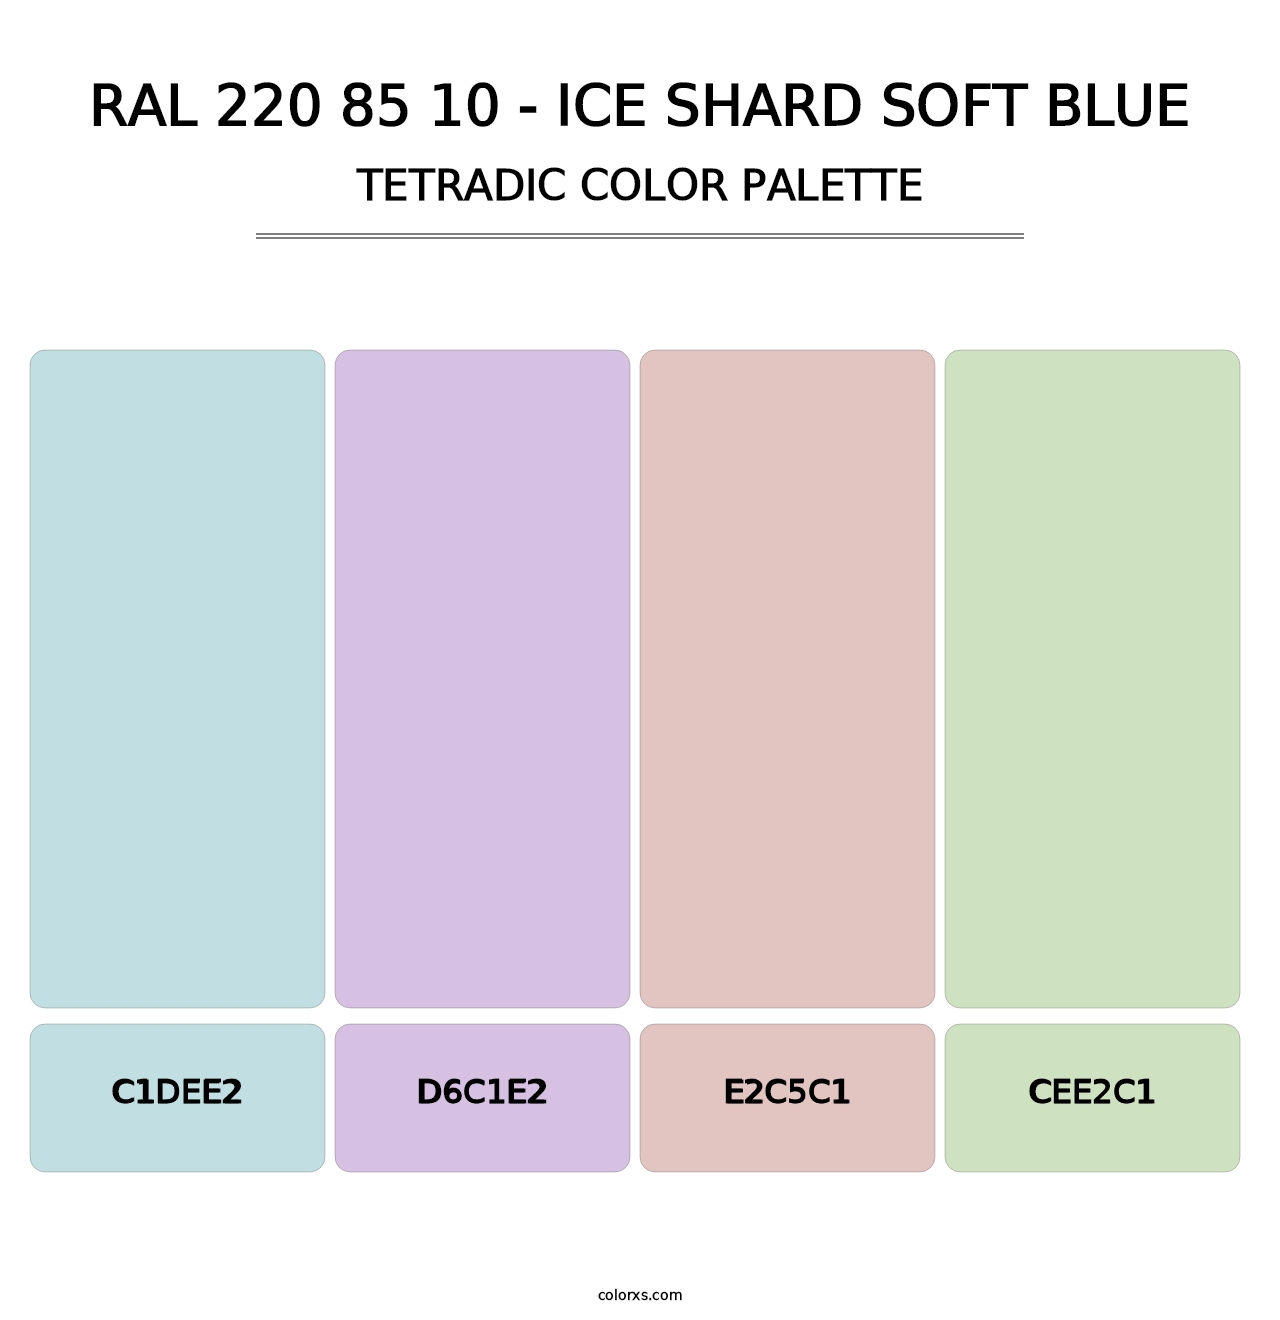 RAL 220 85 10 - Ice Shard Soft Blue - Tetradic Color Palette